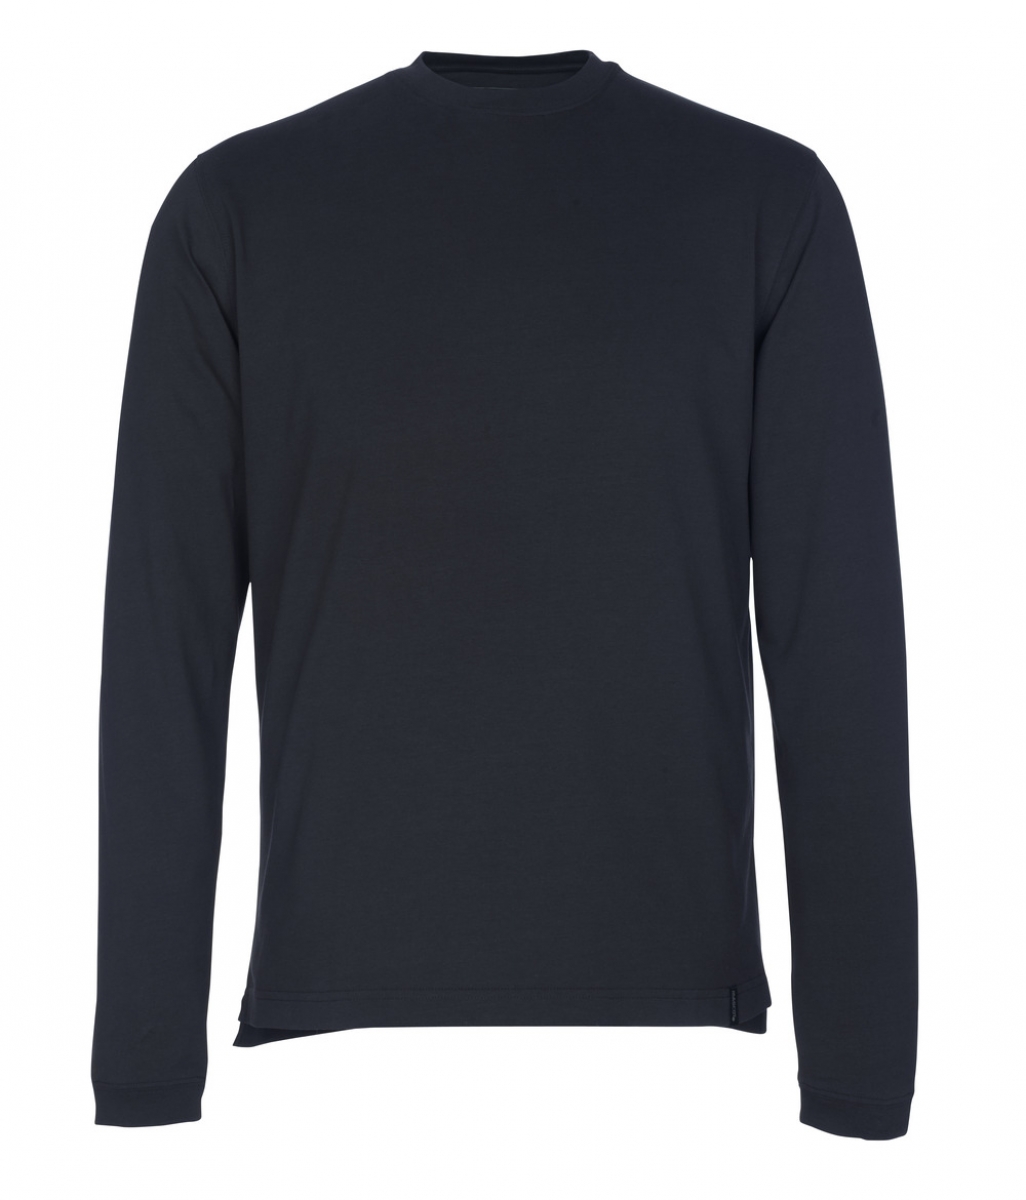 MASCOT-Worker-Shirts, T-Shirt, Albi, 195 g/m, schwarzblau